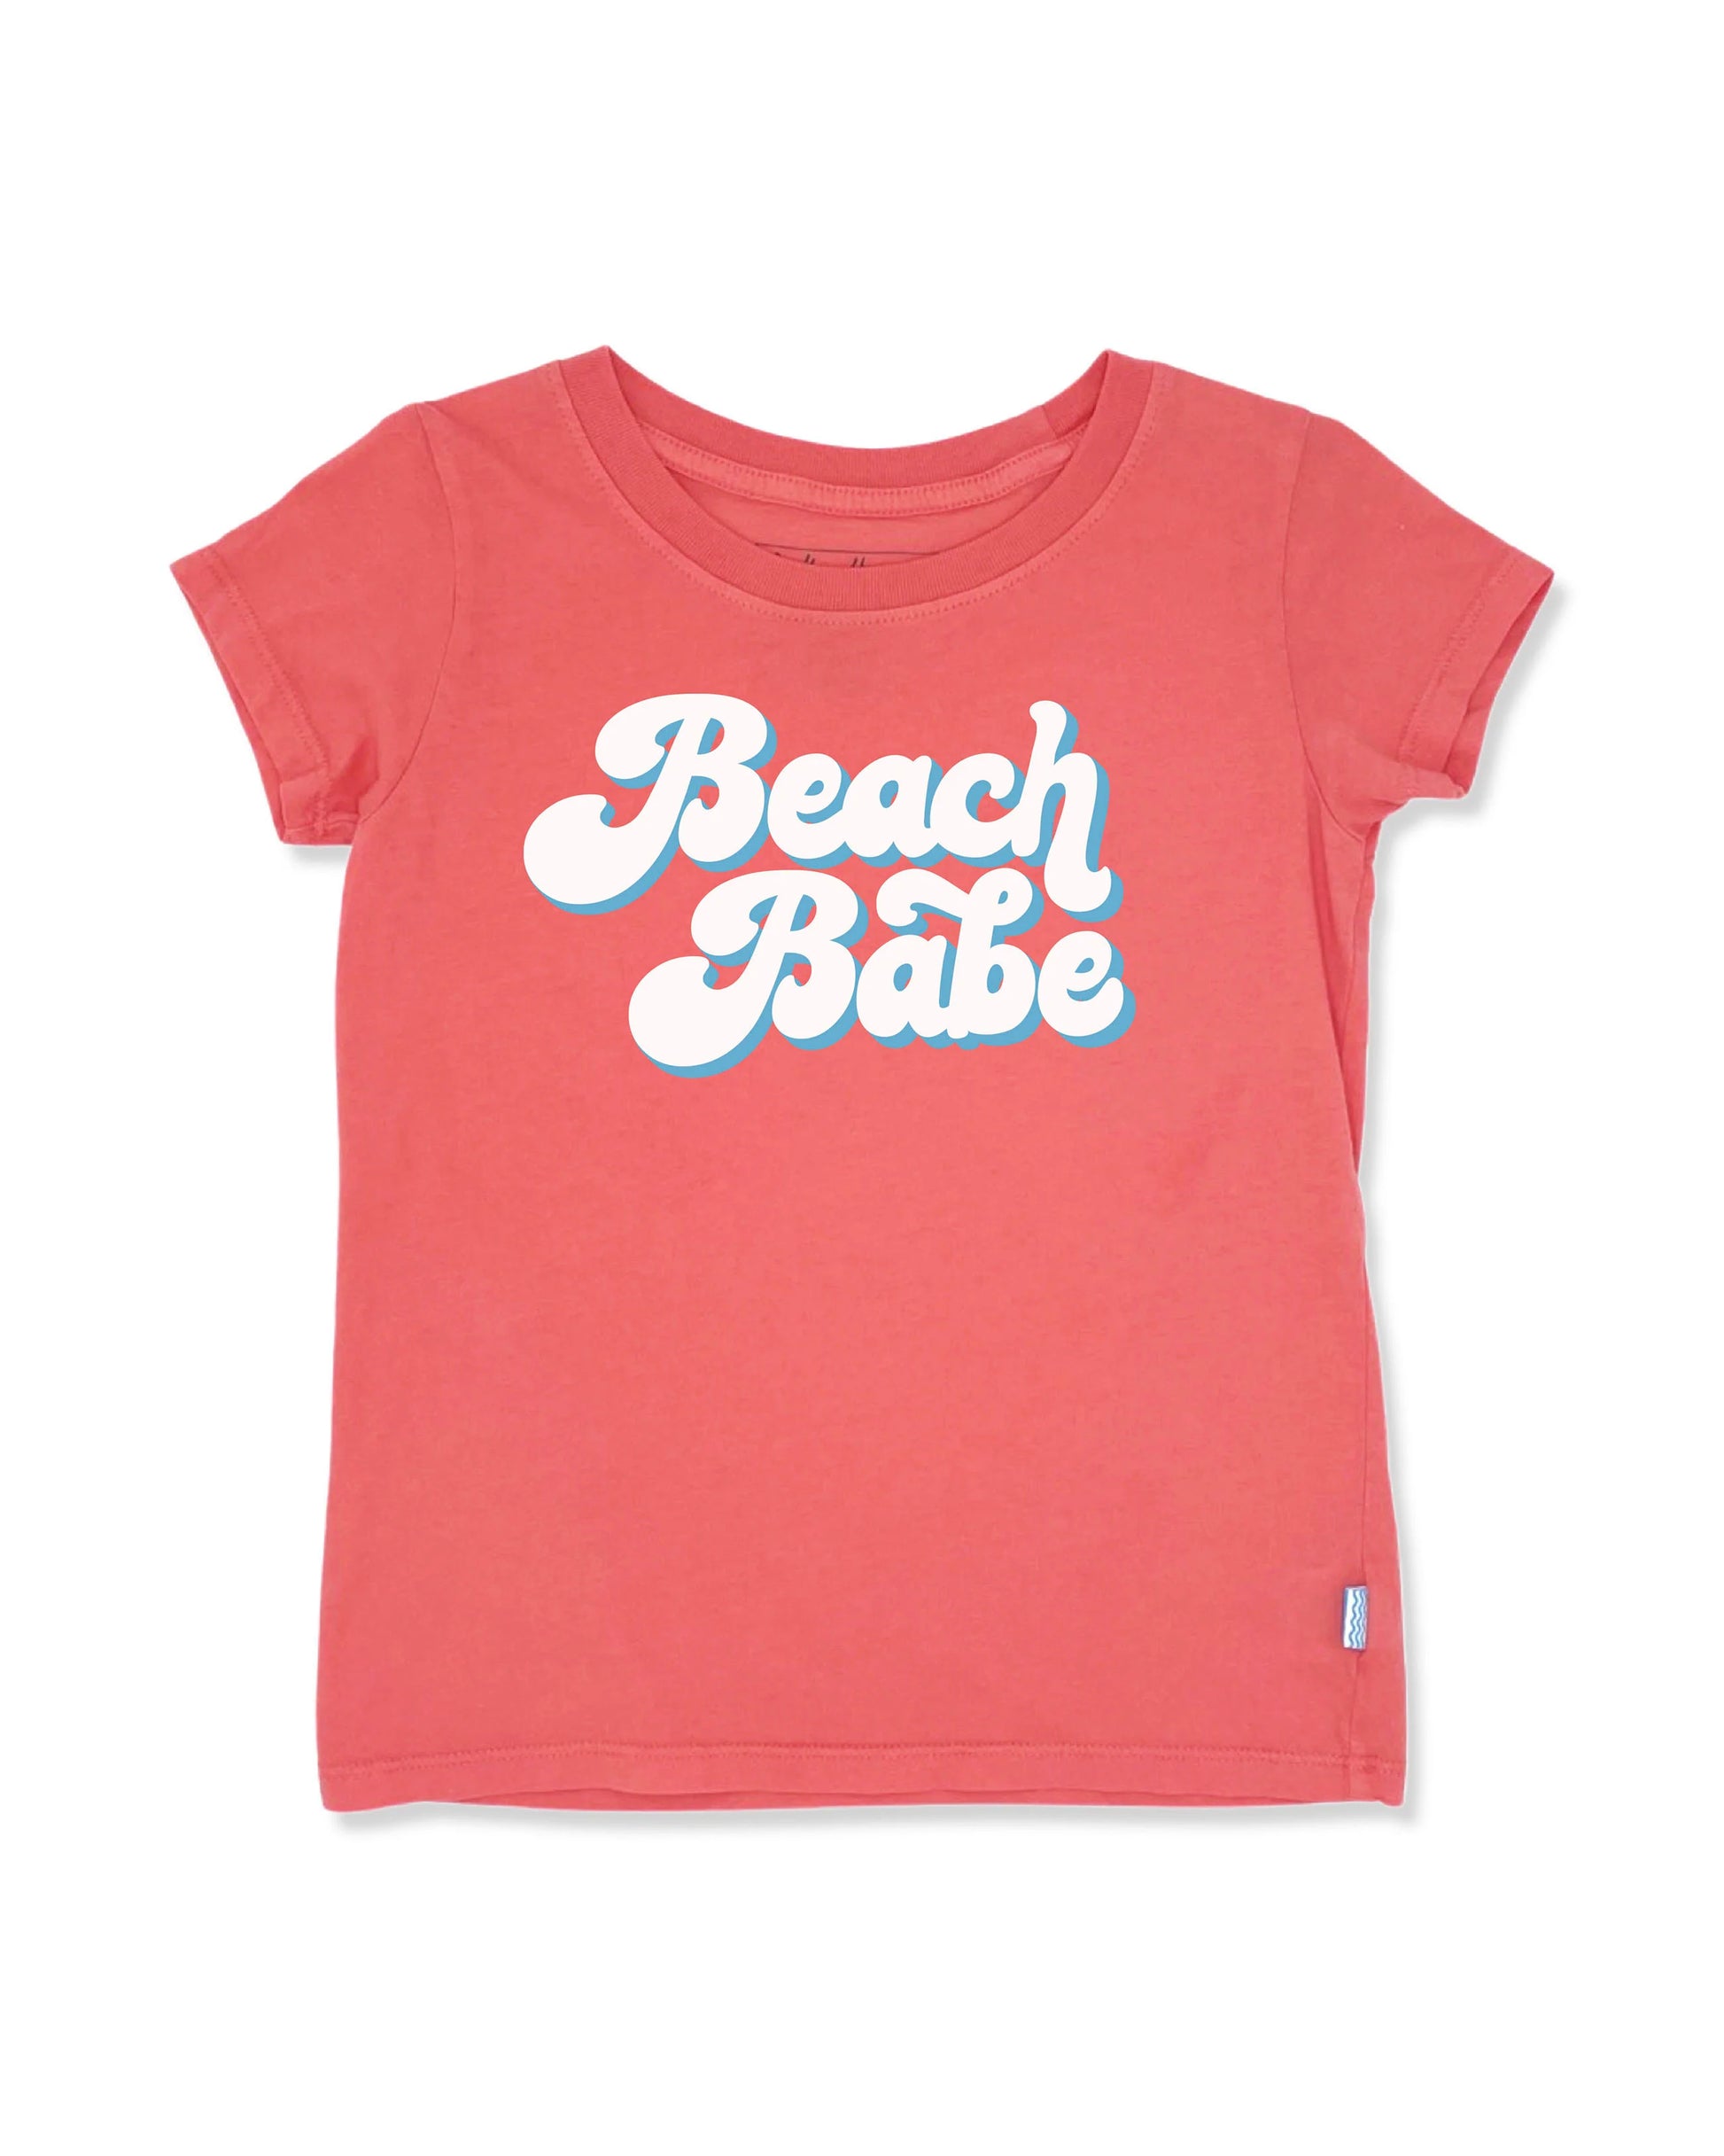 Beach Babe Everyday Tee  - Doodlebug's Children's Boutique